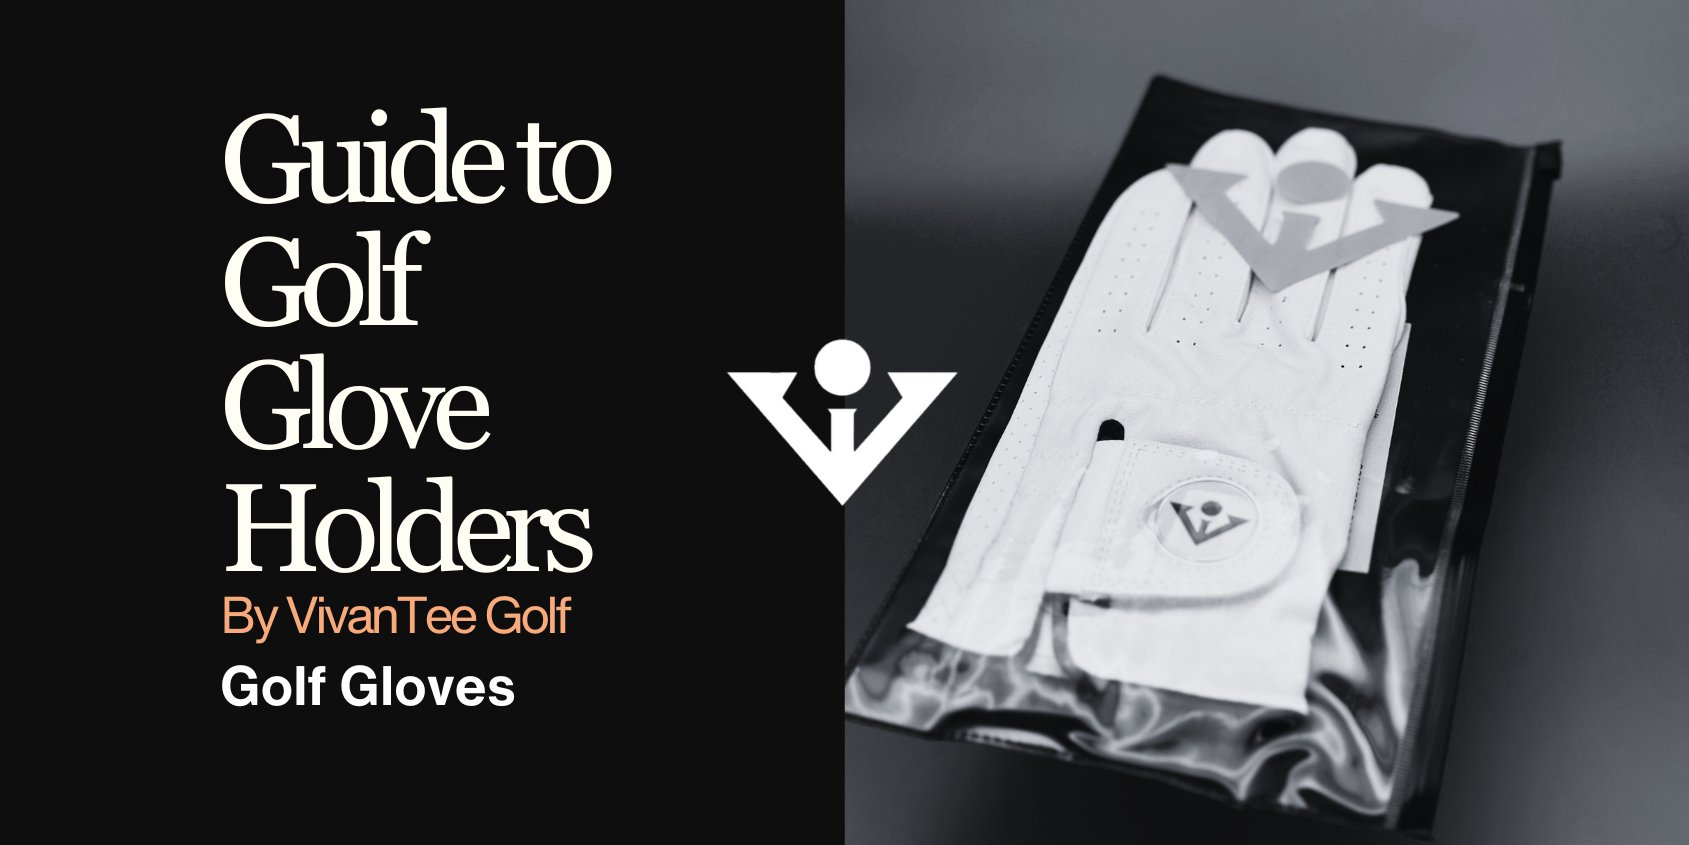 VivanTee Golf glove packaging, a do it yourself alternative to act as a golf glove holder